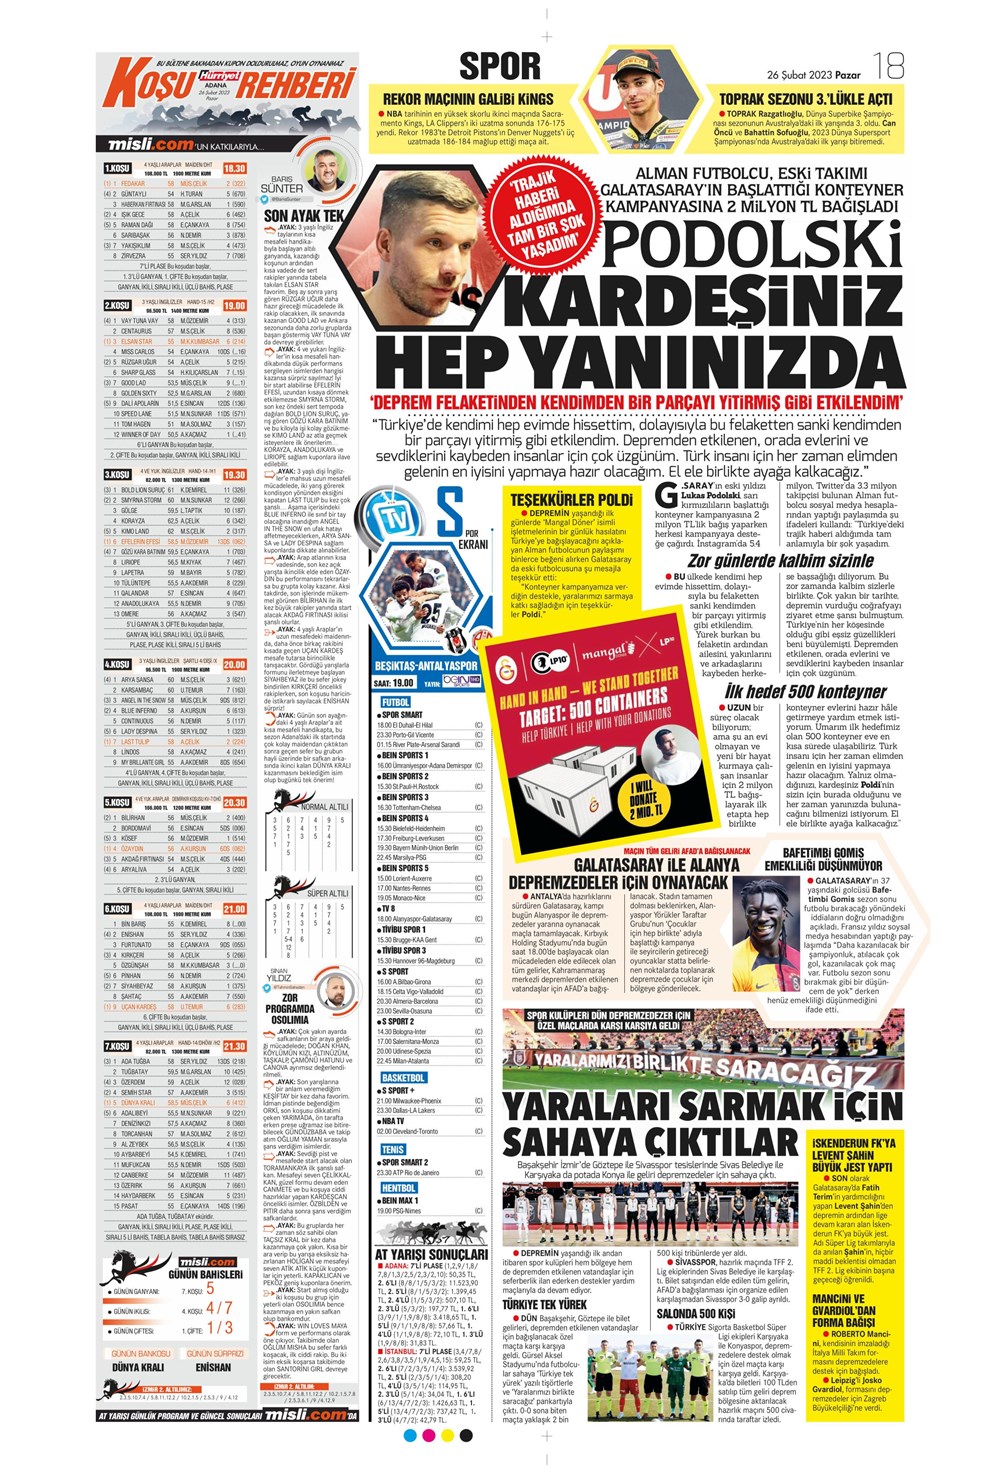 "Valenci'ağa' böyle istedi" - Sporun manşetleri  - 16. Foto